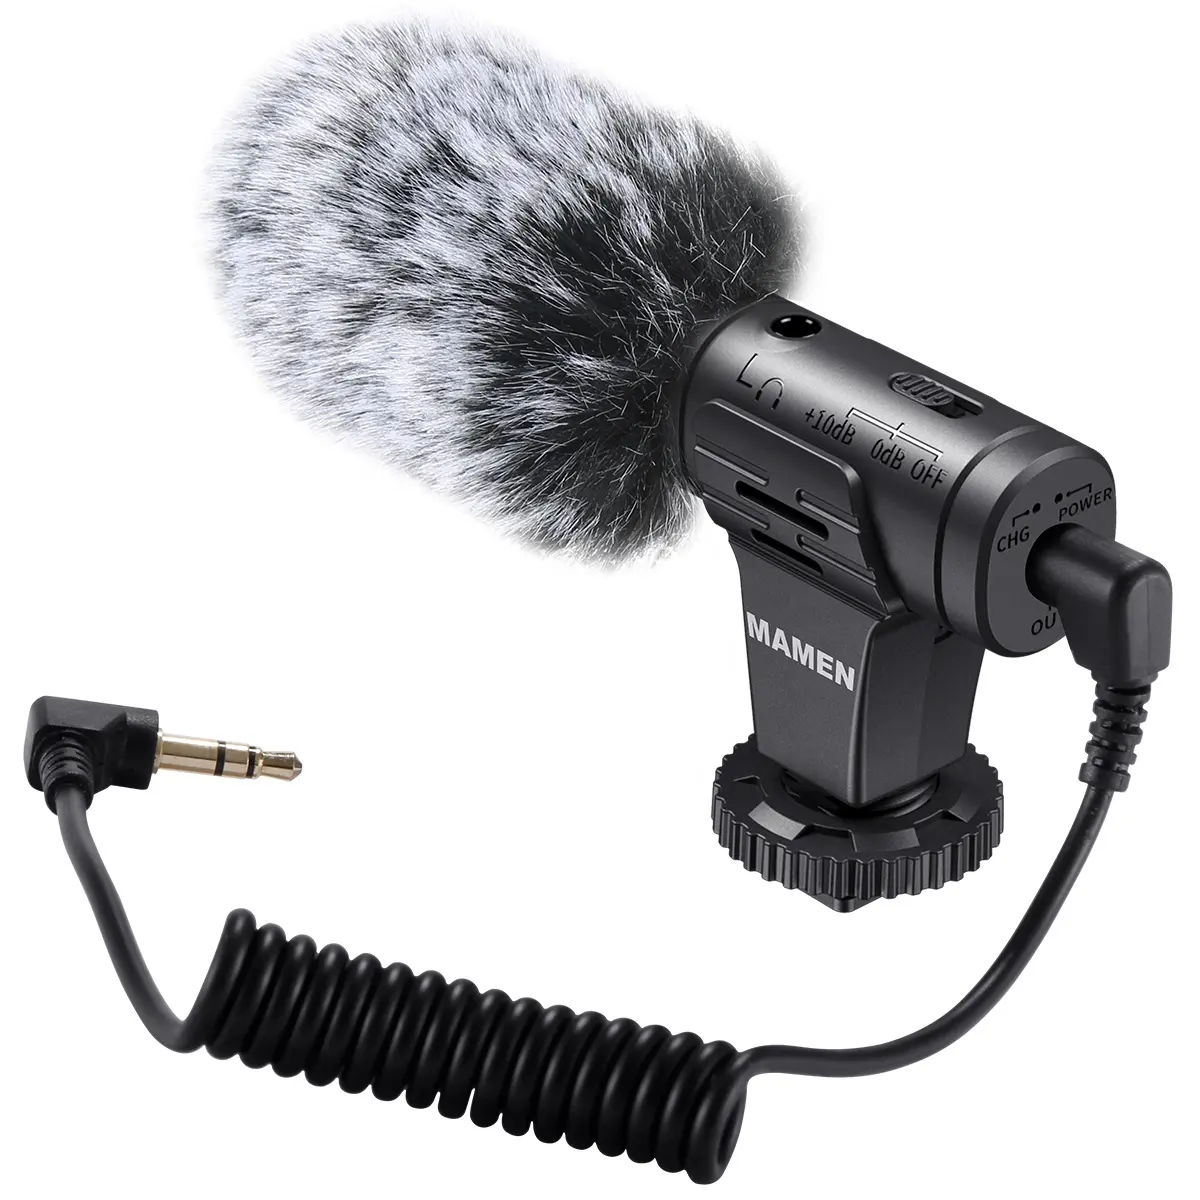 Micrófono de condensador usb para cámara, micrófono universal de vídeo rode con montaje de choque, para escopeta, nuevo estilo